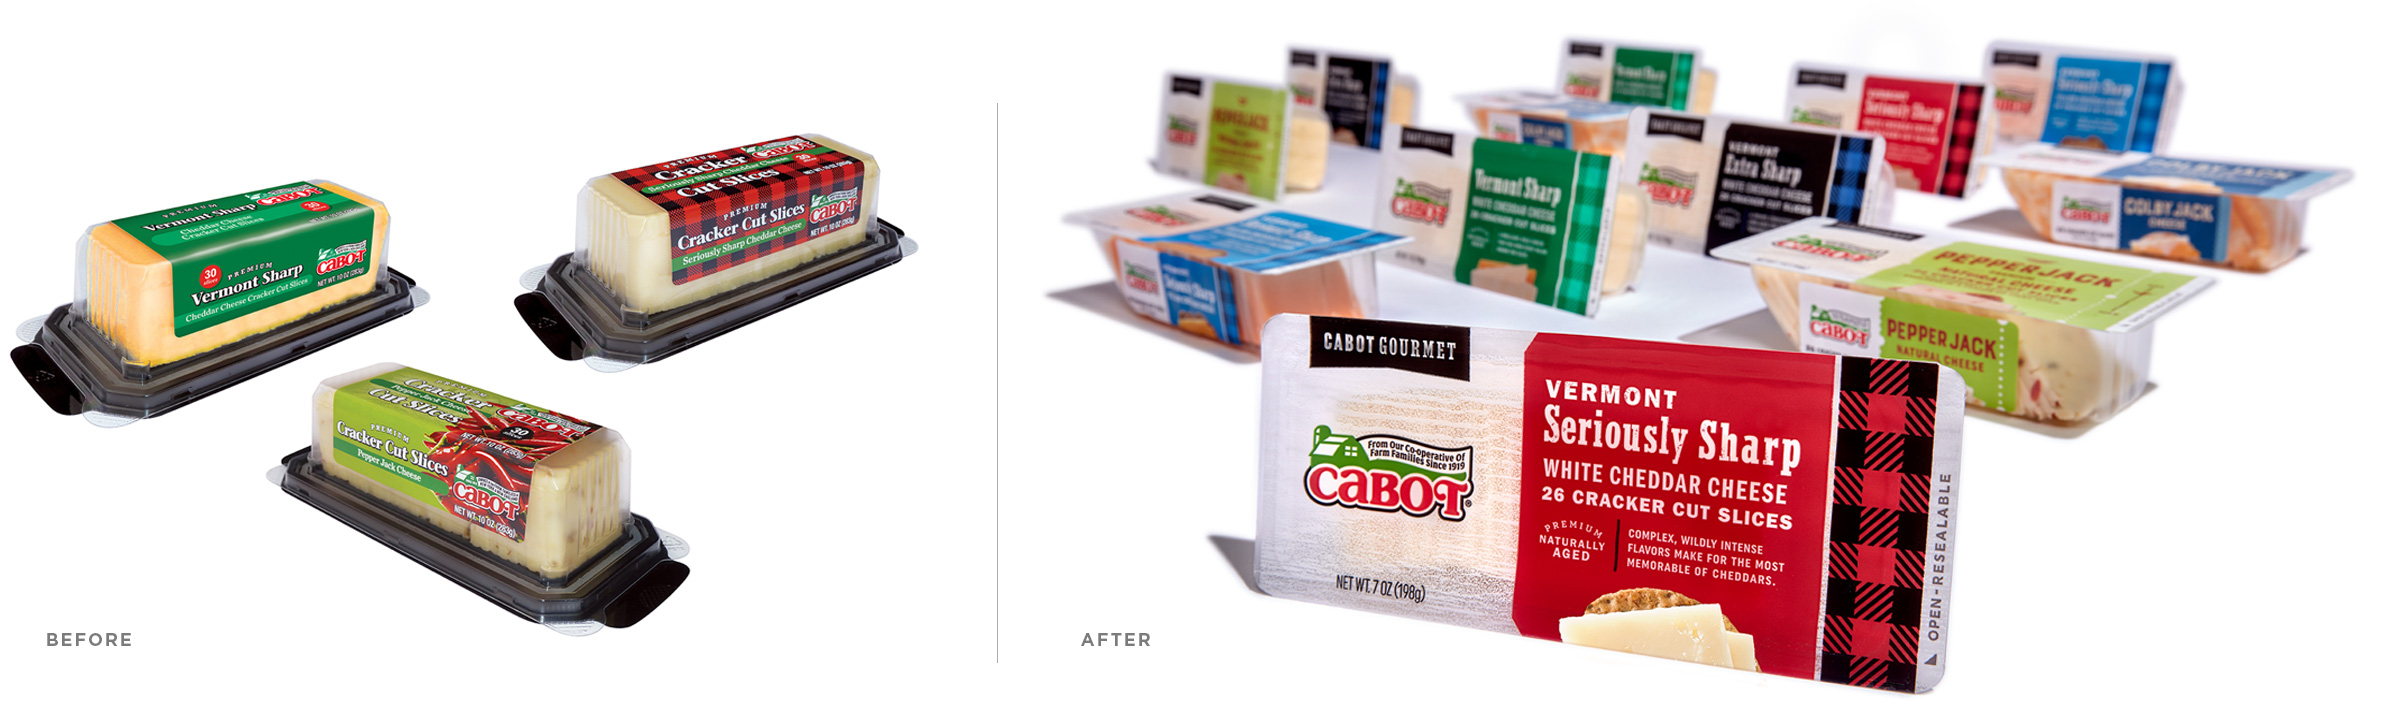 Cabot packaging before & after by Werner Design Werks